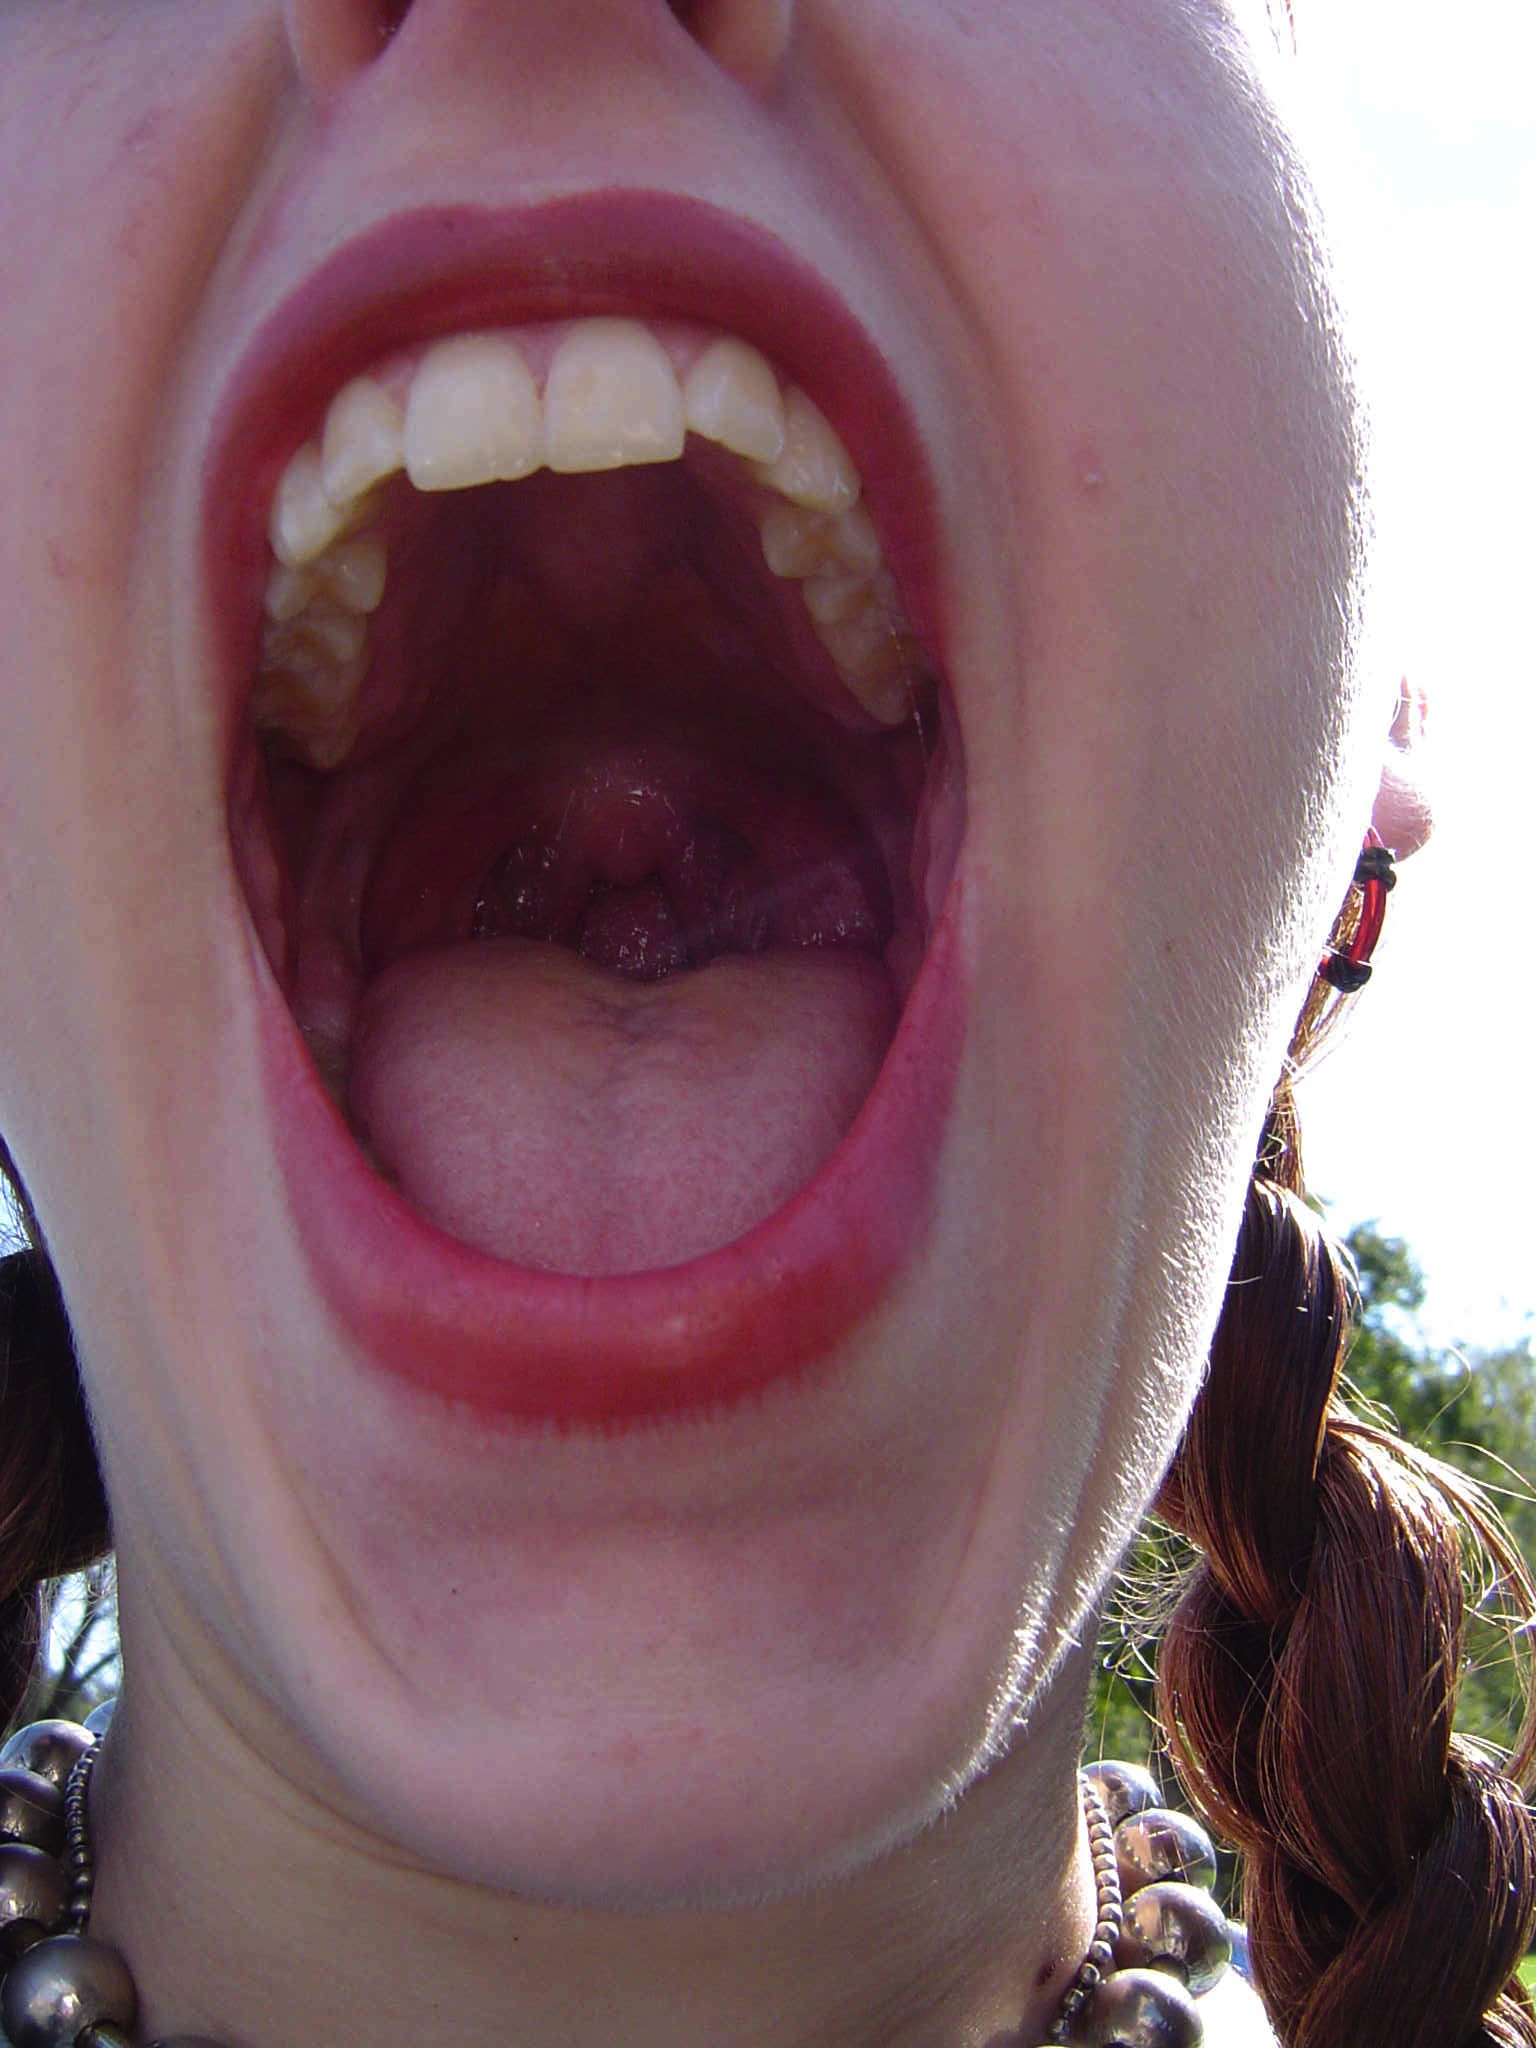 Scream Mouth 21